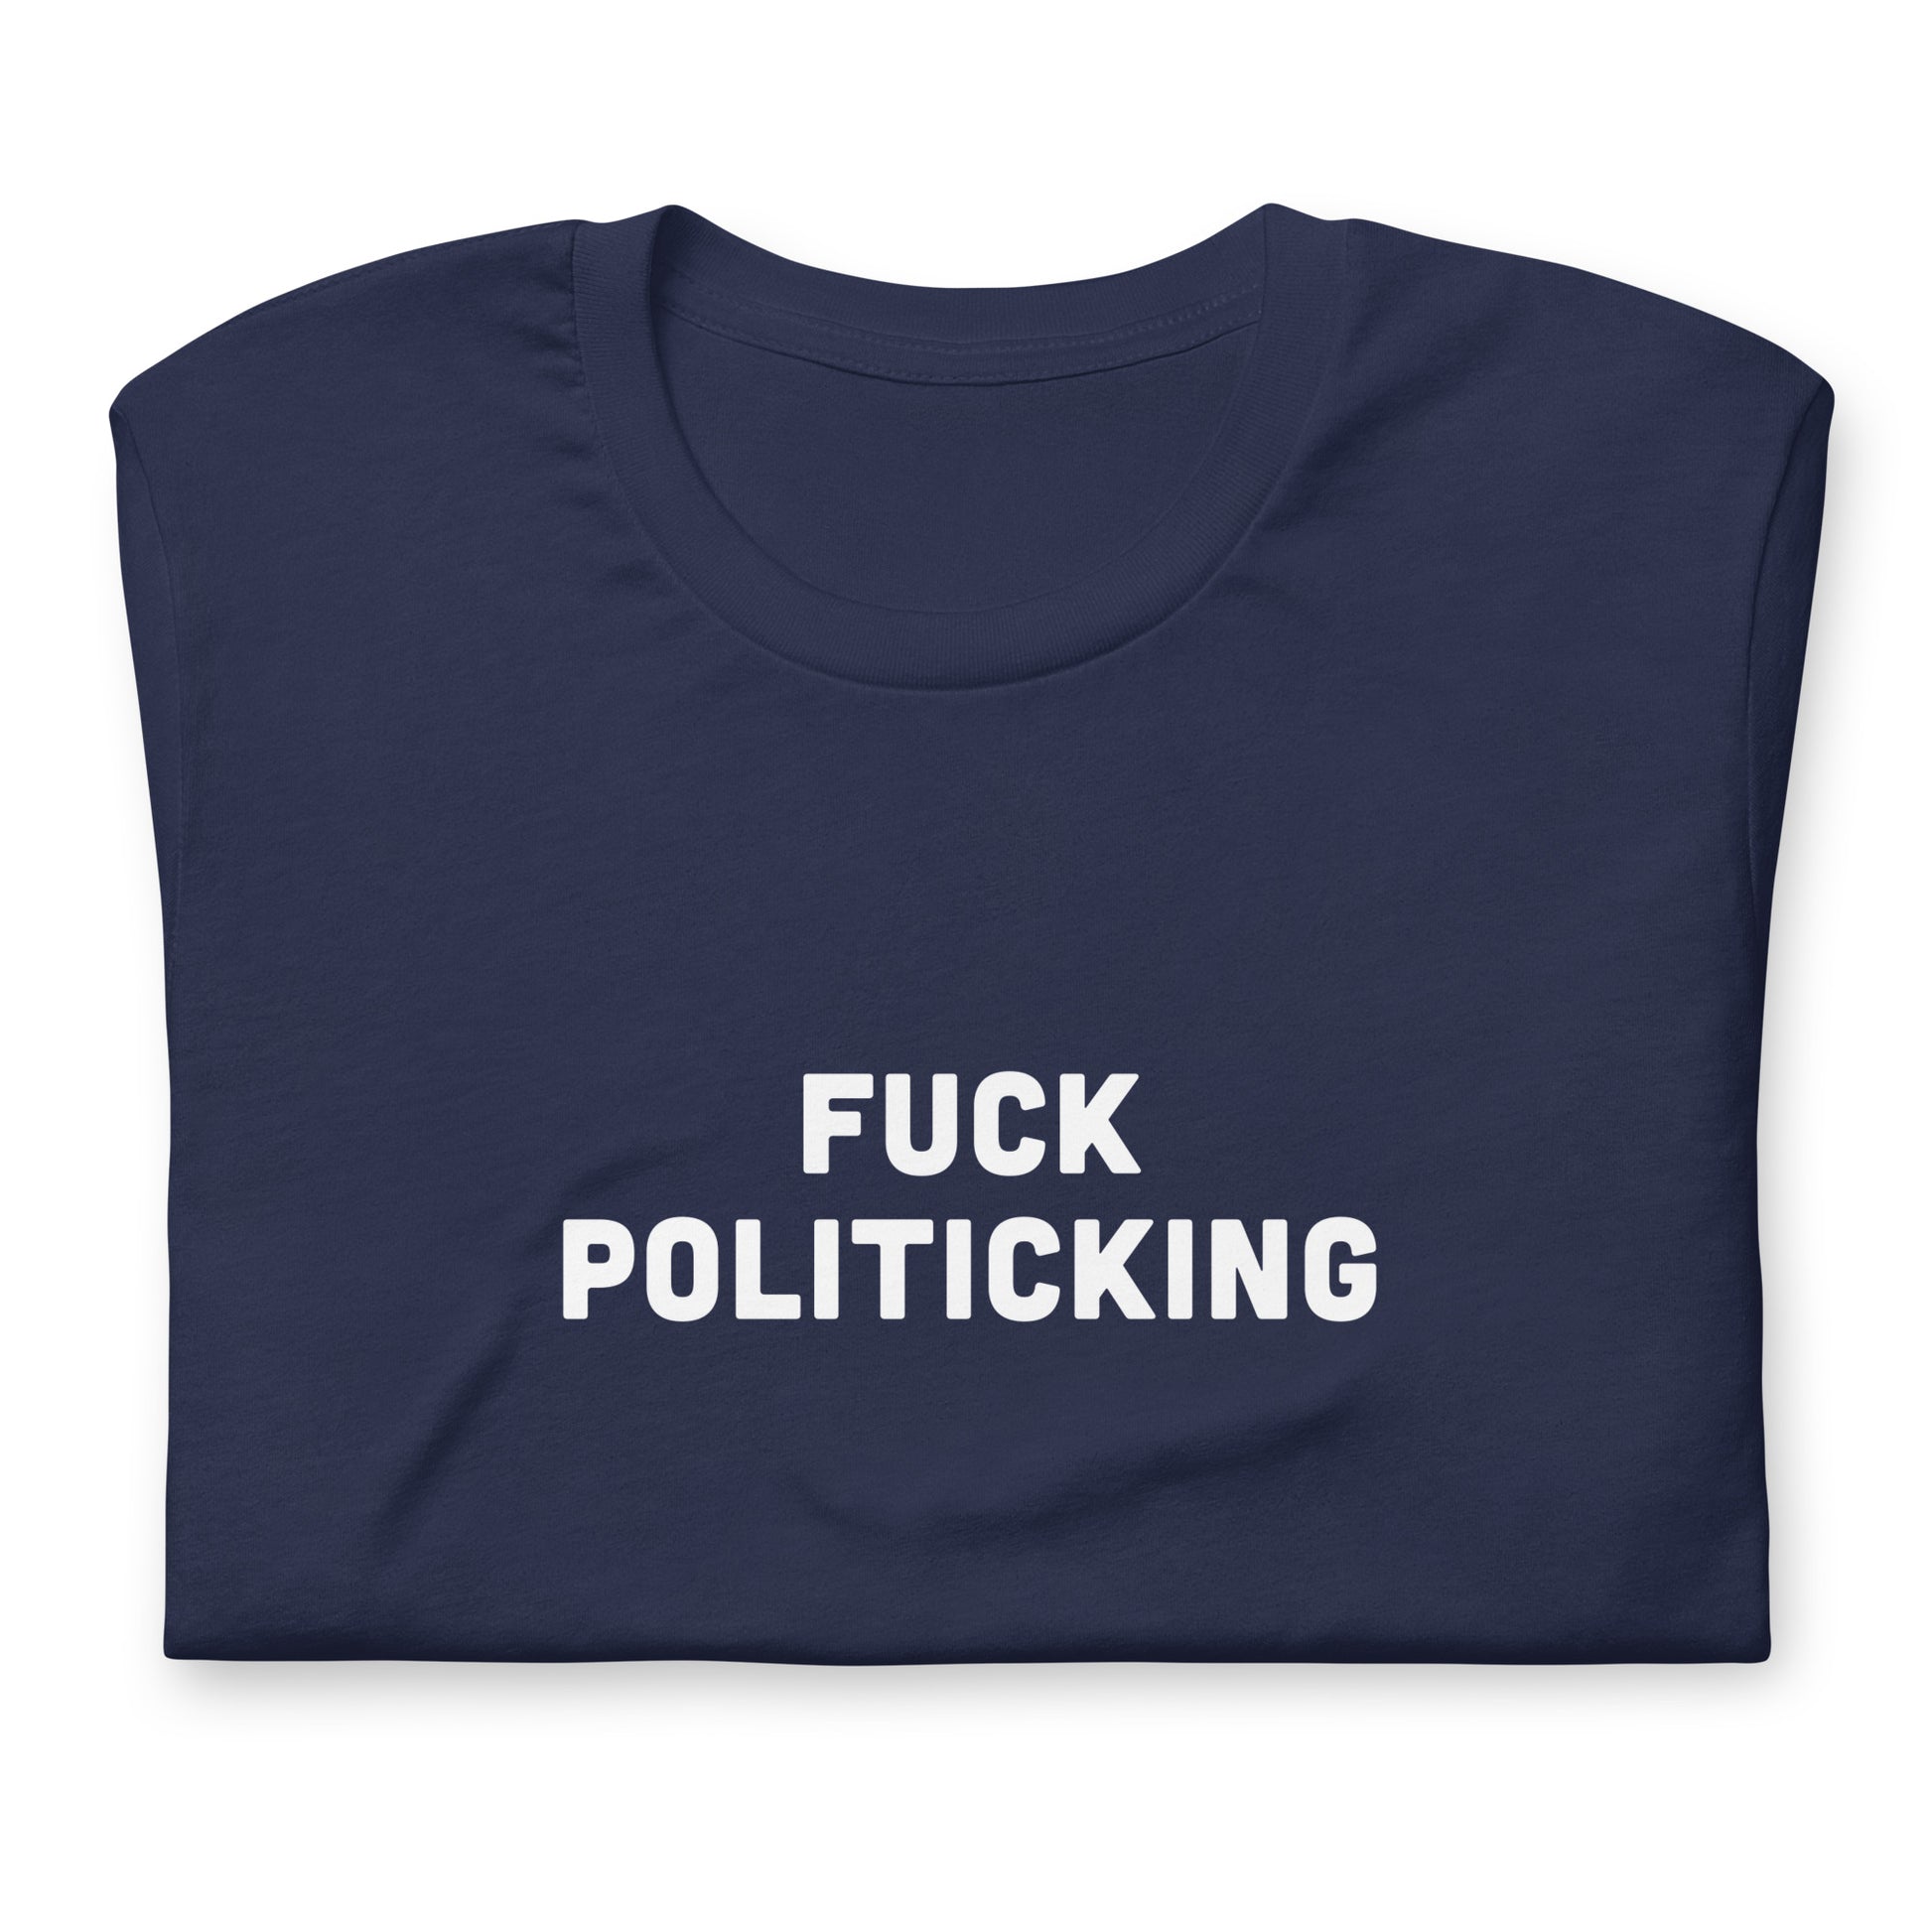 Fuck Politicking T-Shirt Size L Color Black